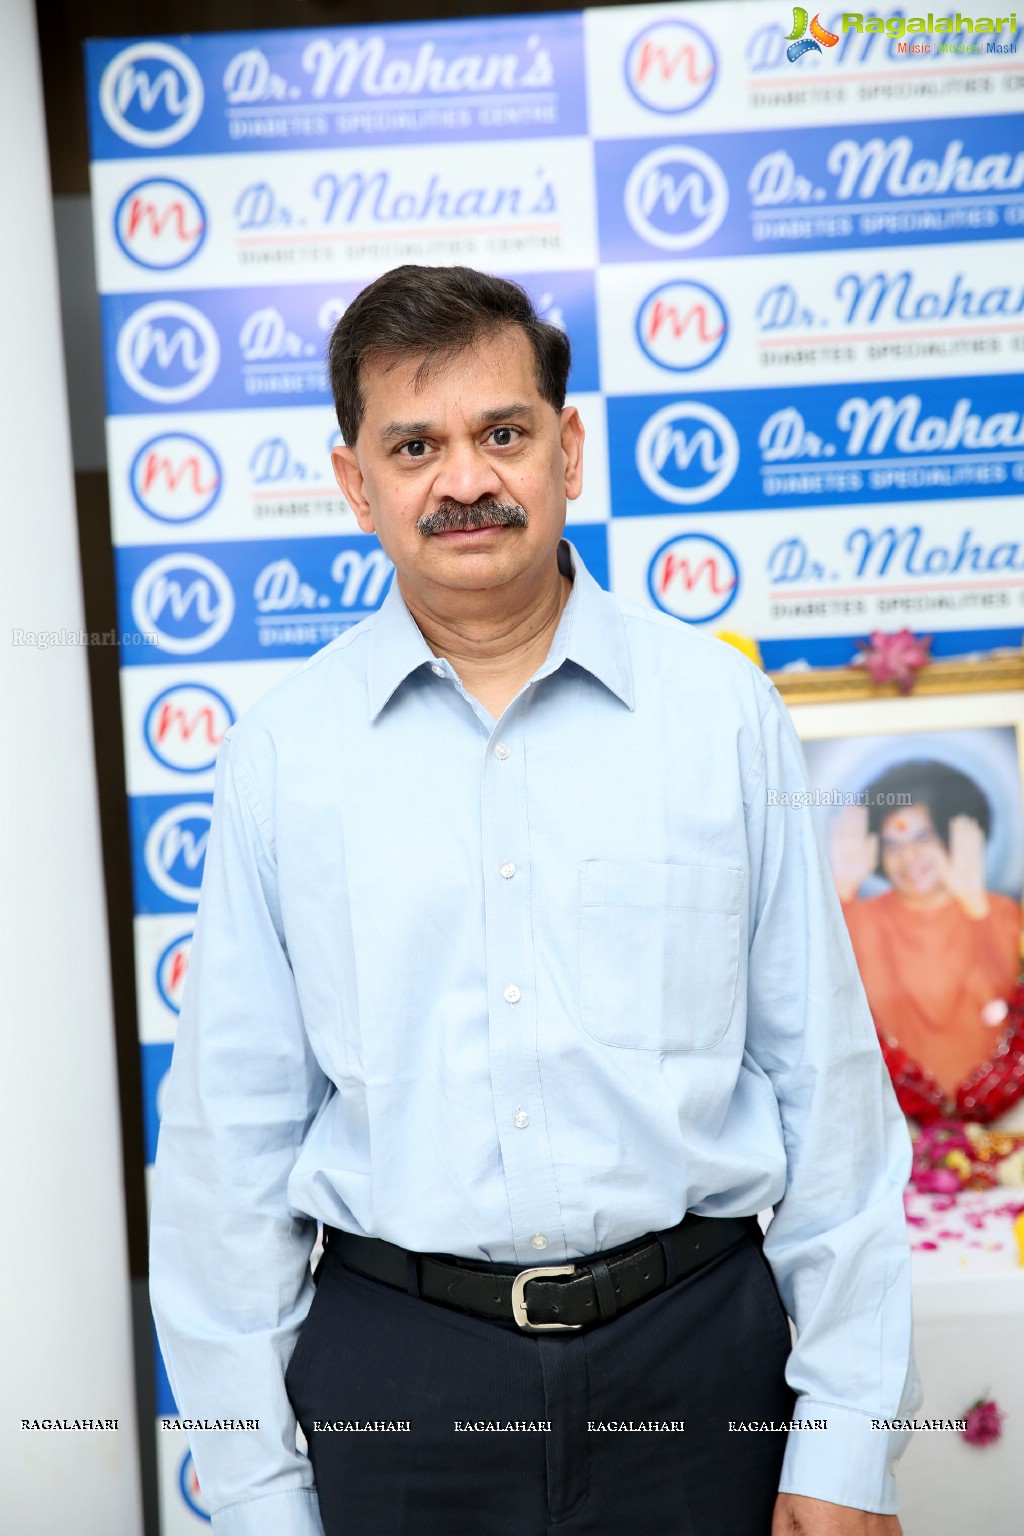 Dr. Mohan's Diabetes Specialties Centre Launch, AS Rao Nagar, Hyderabad